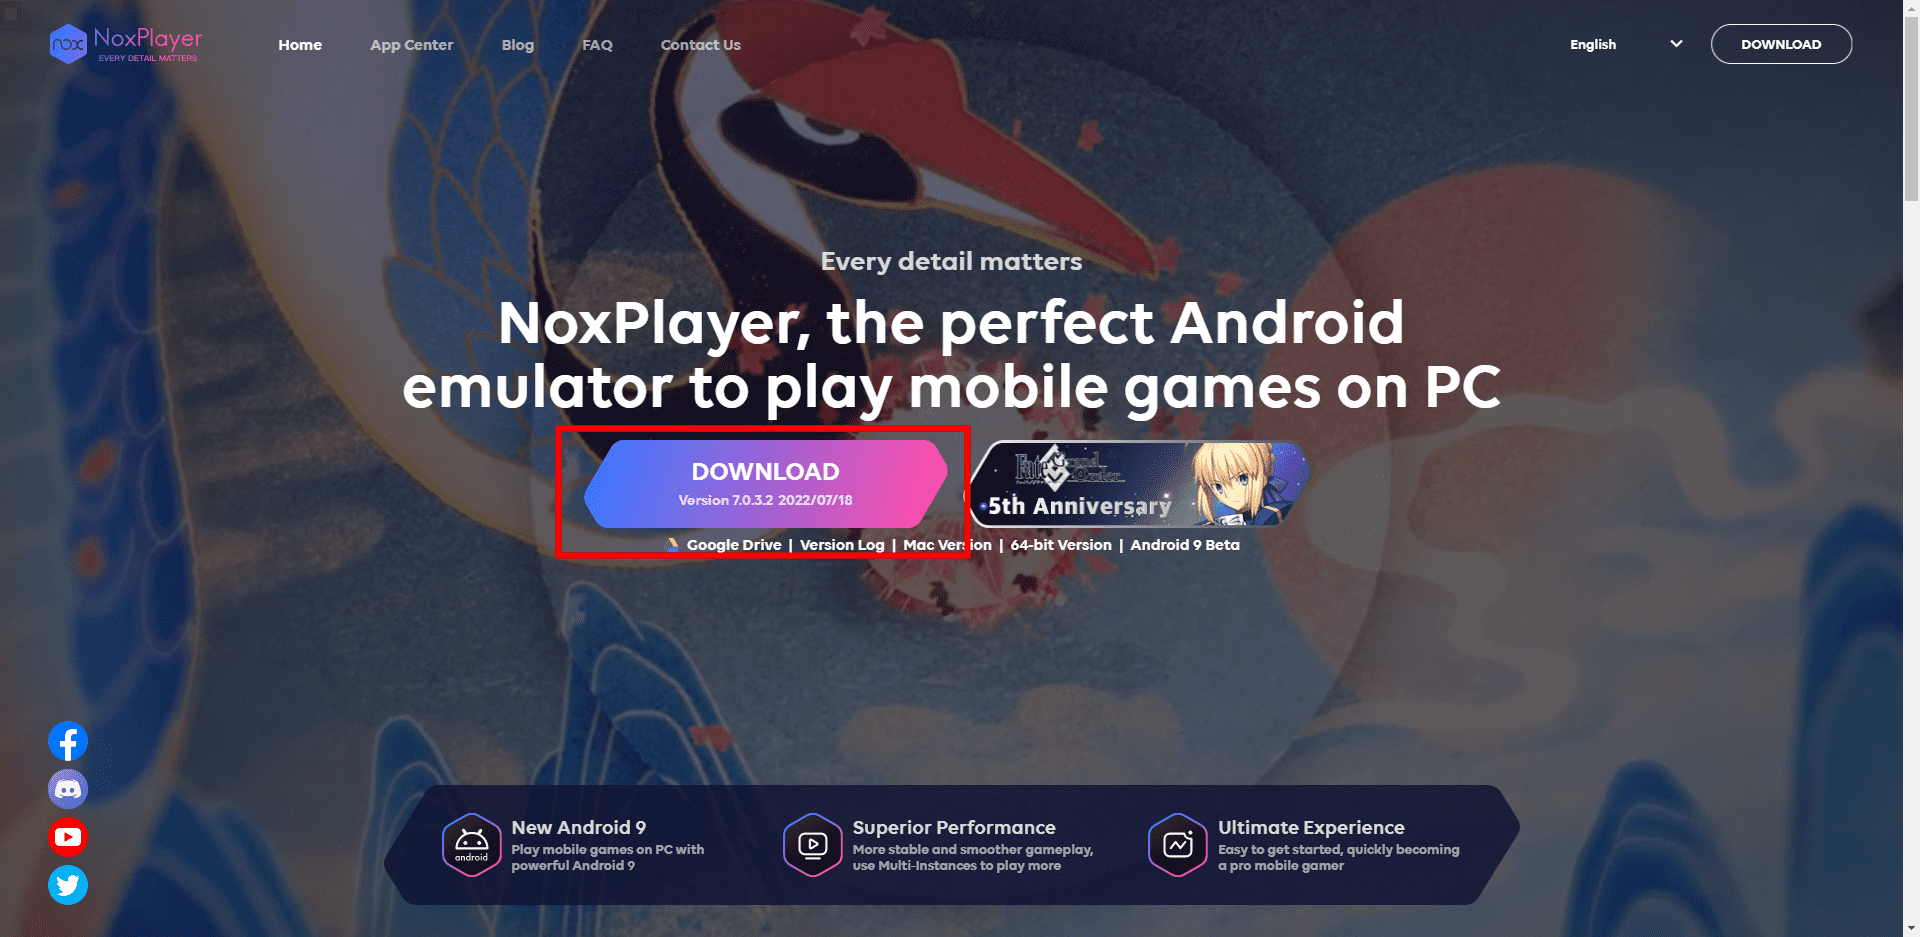 Noah's Heart – Apps no Google Play